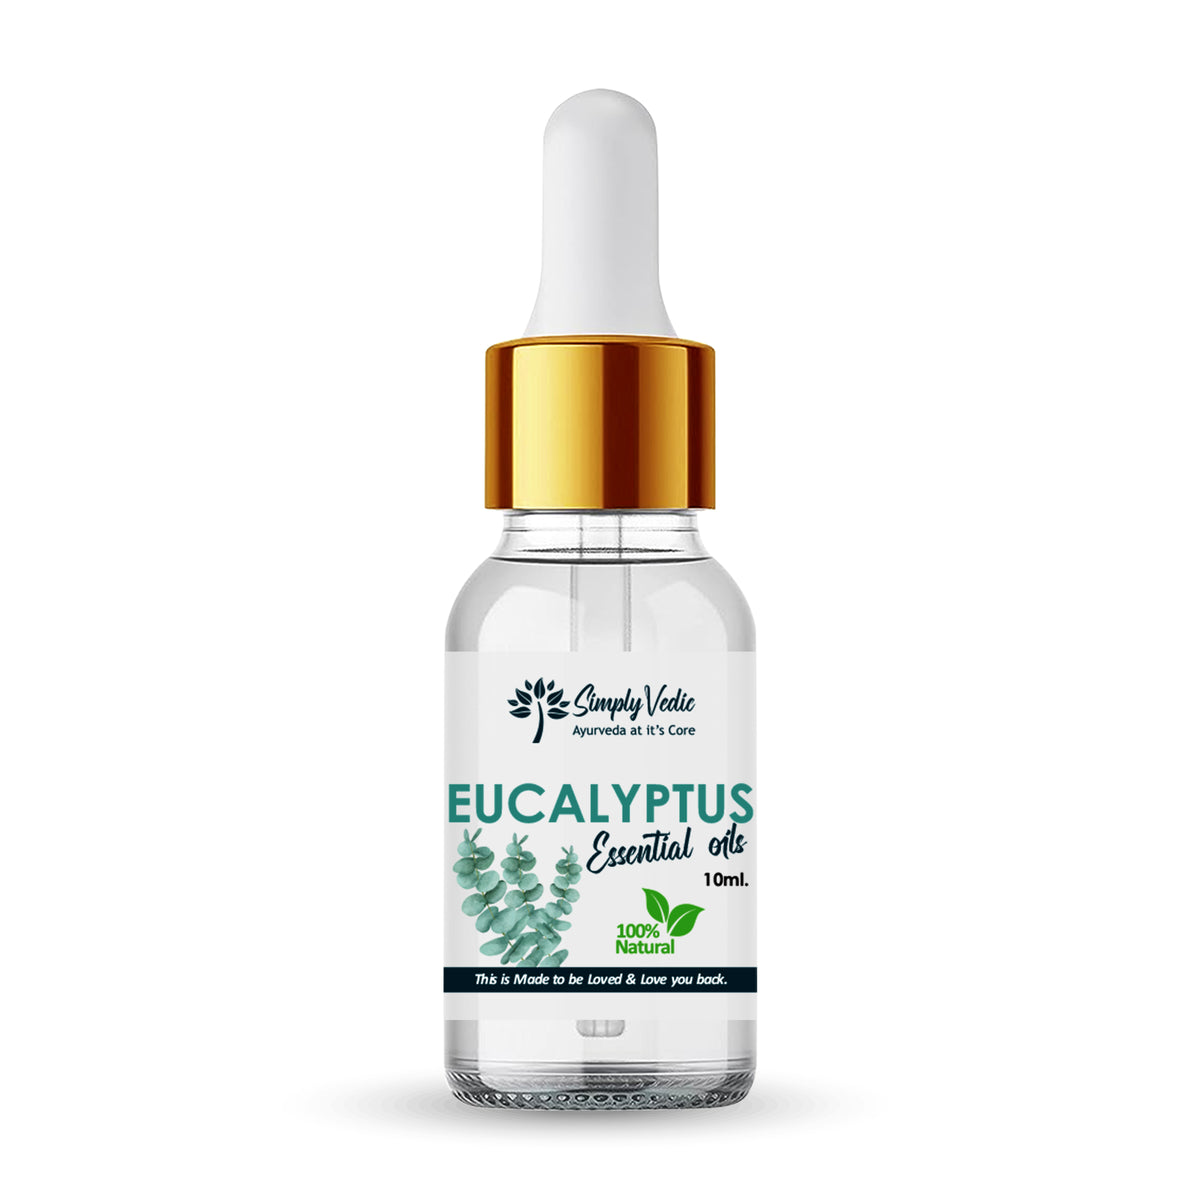 Simply Vedic Eucalyptus essential Oil